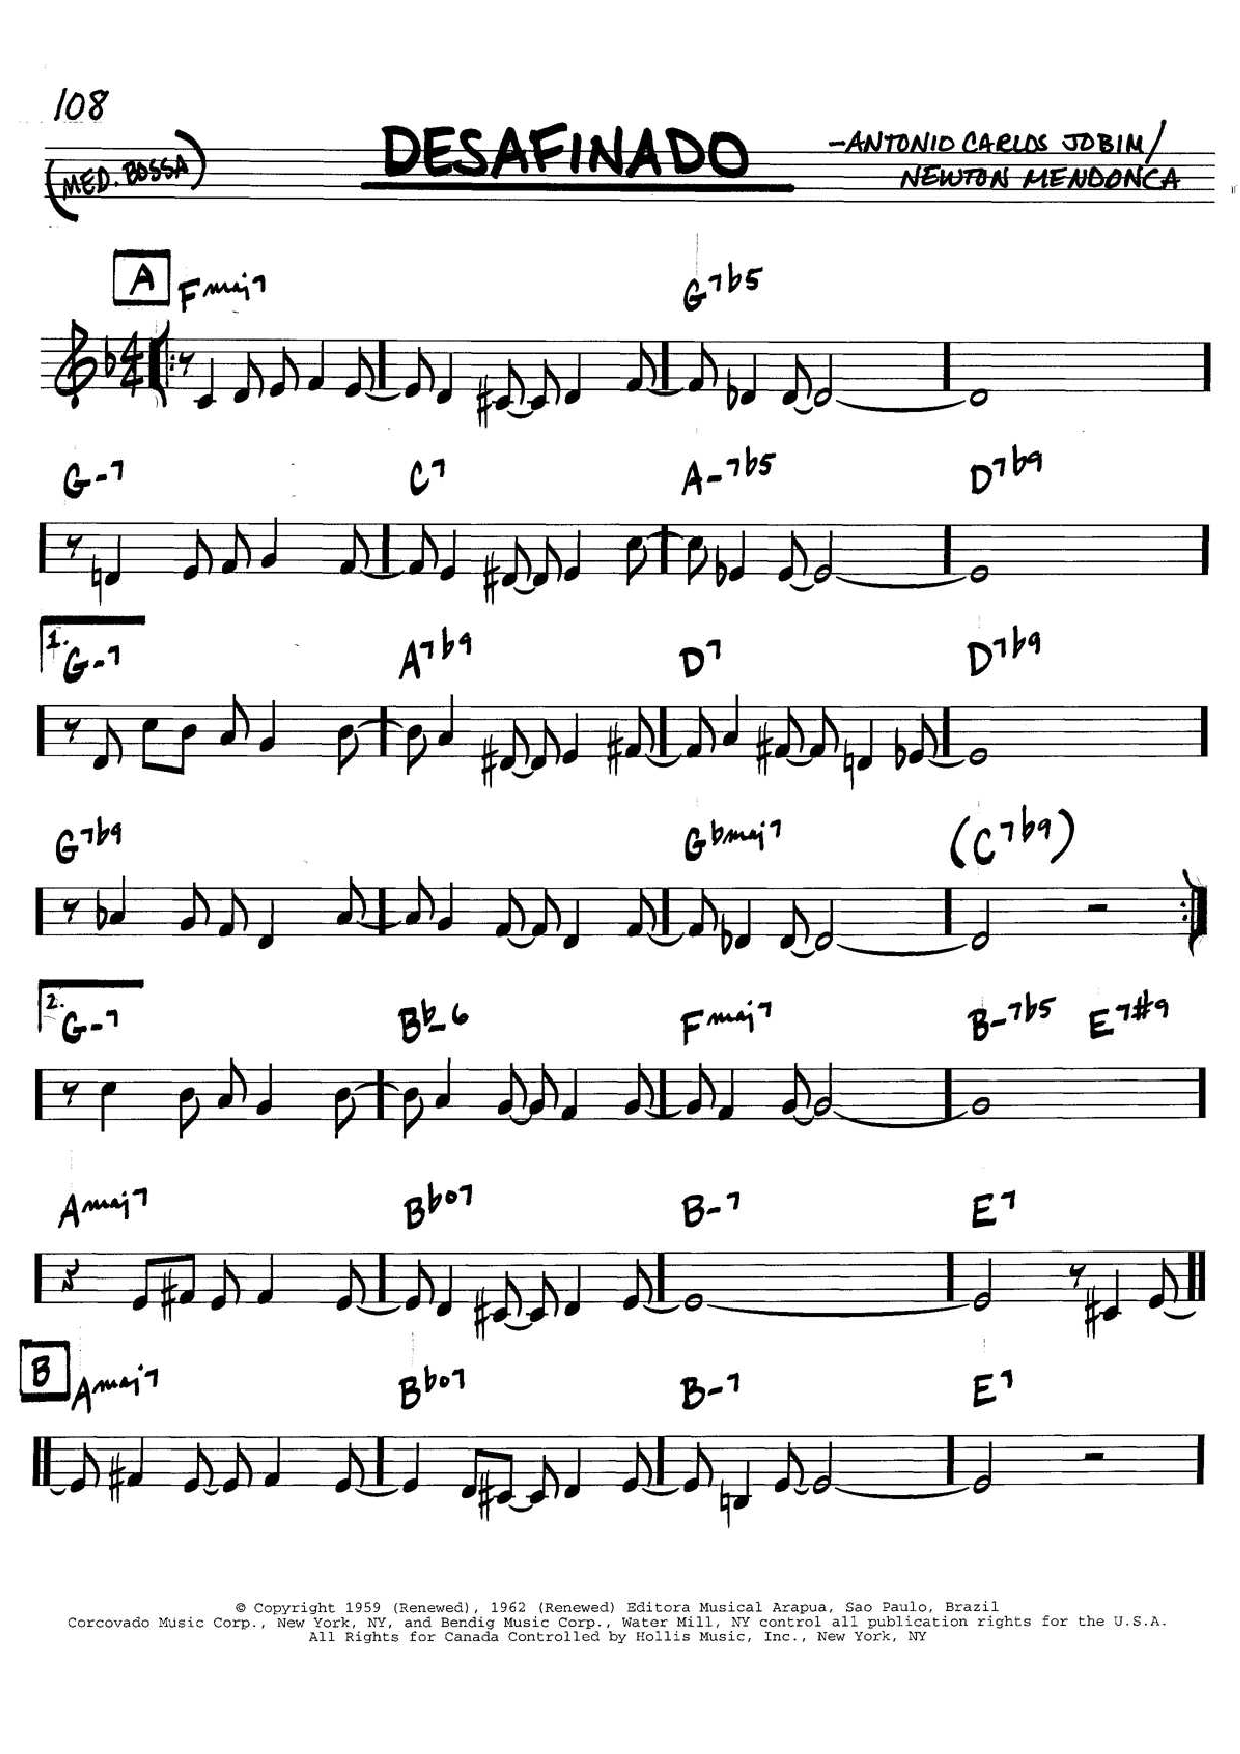 Antonio Carlos Jobim Desafinado Sheet Music Notes & Chords for Real Book - Melody & Chords - C Instruments - Download or Print PDF